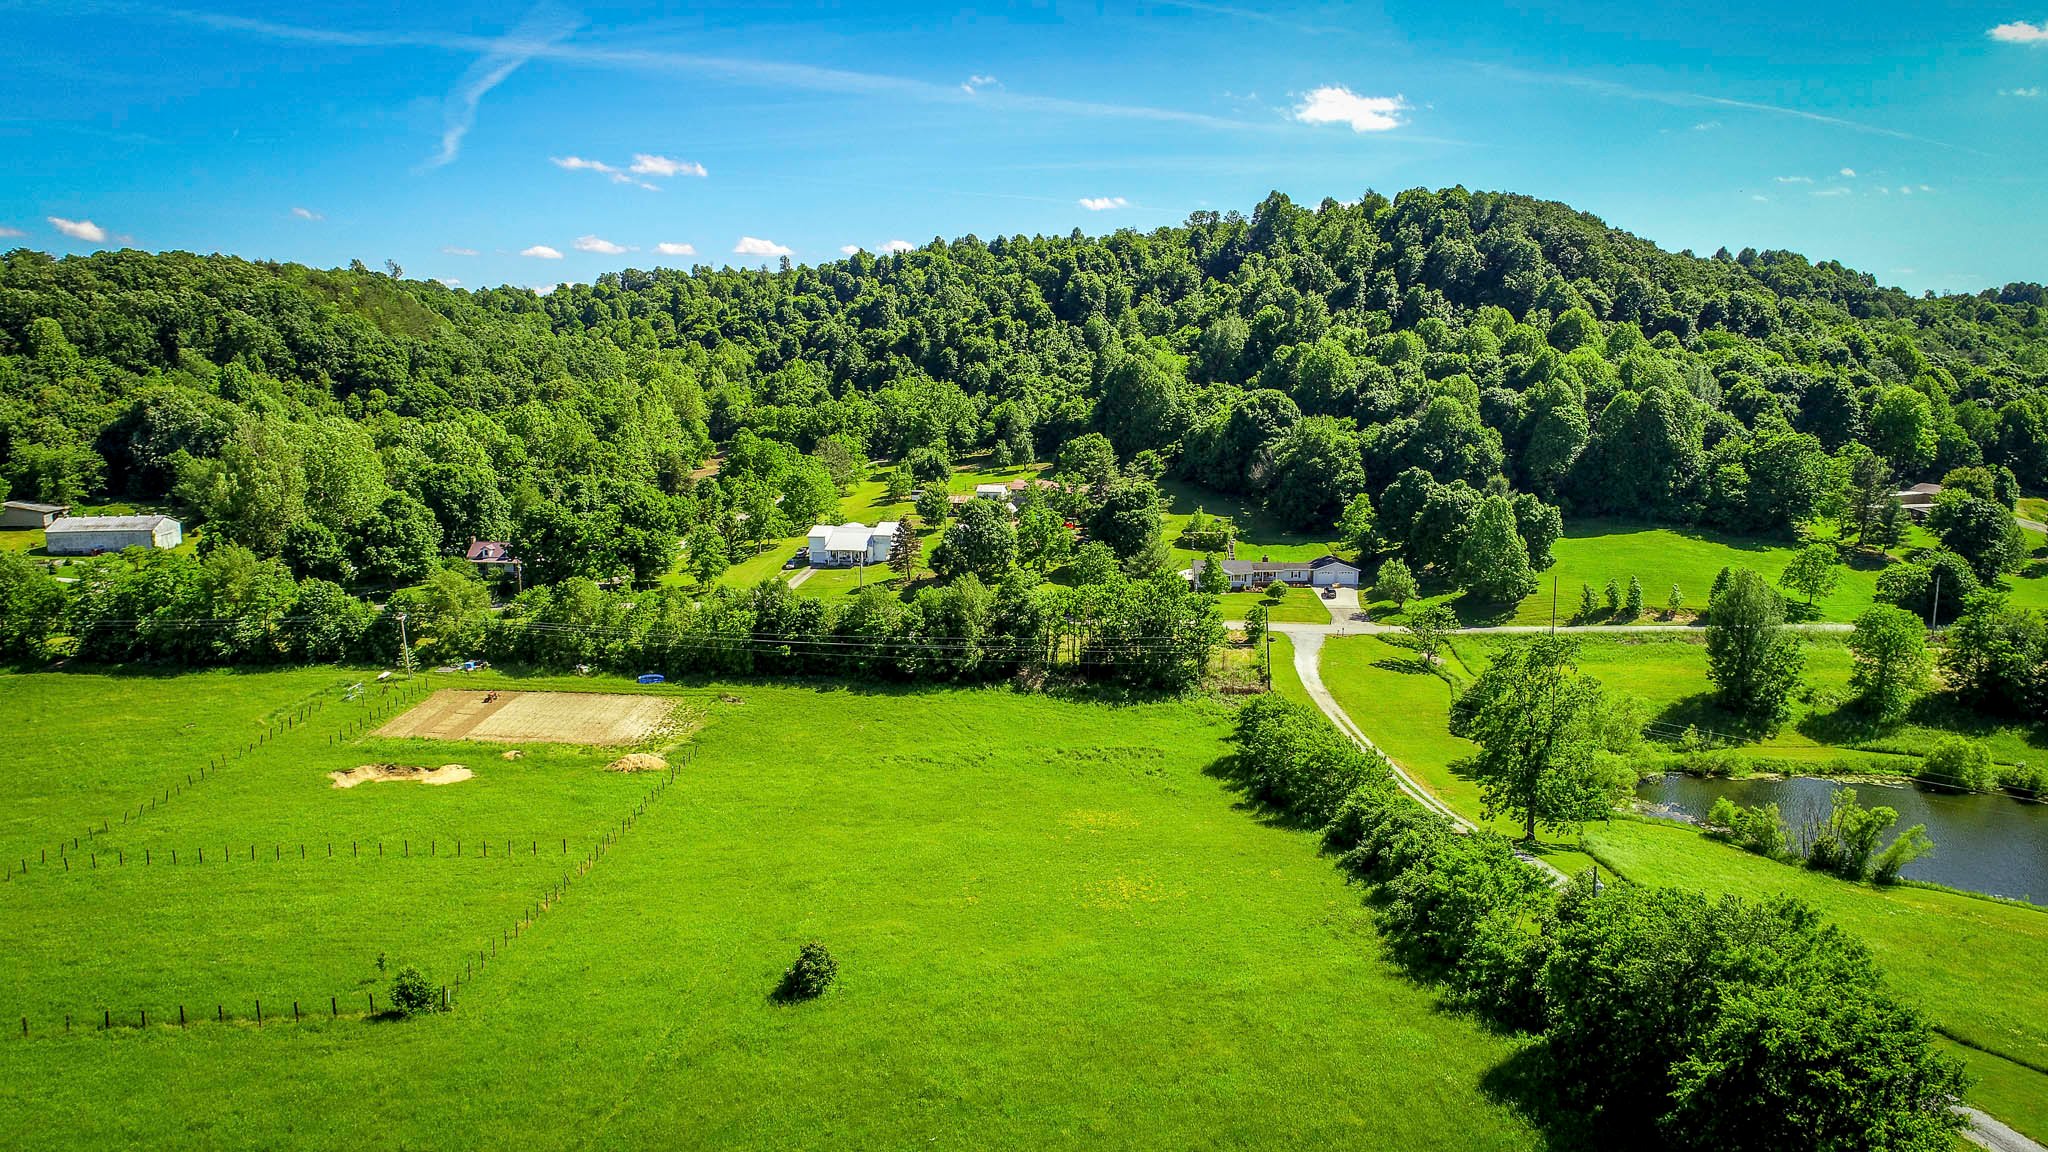 4 acres Kentucky Land for sale - bluegrassteam